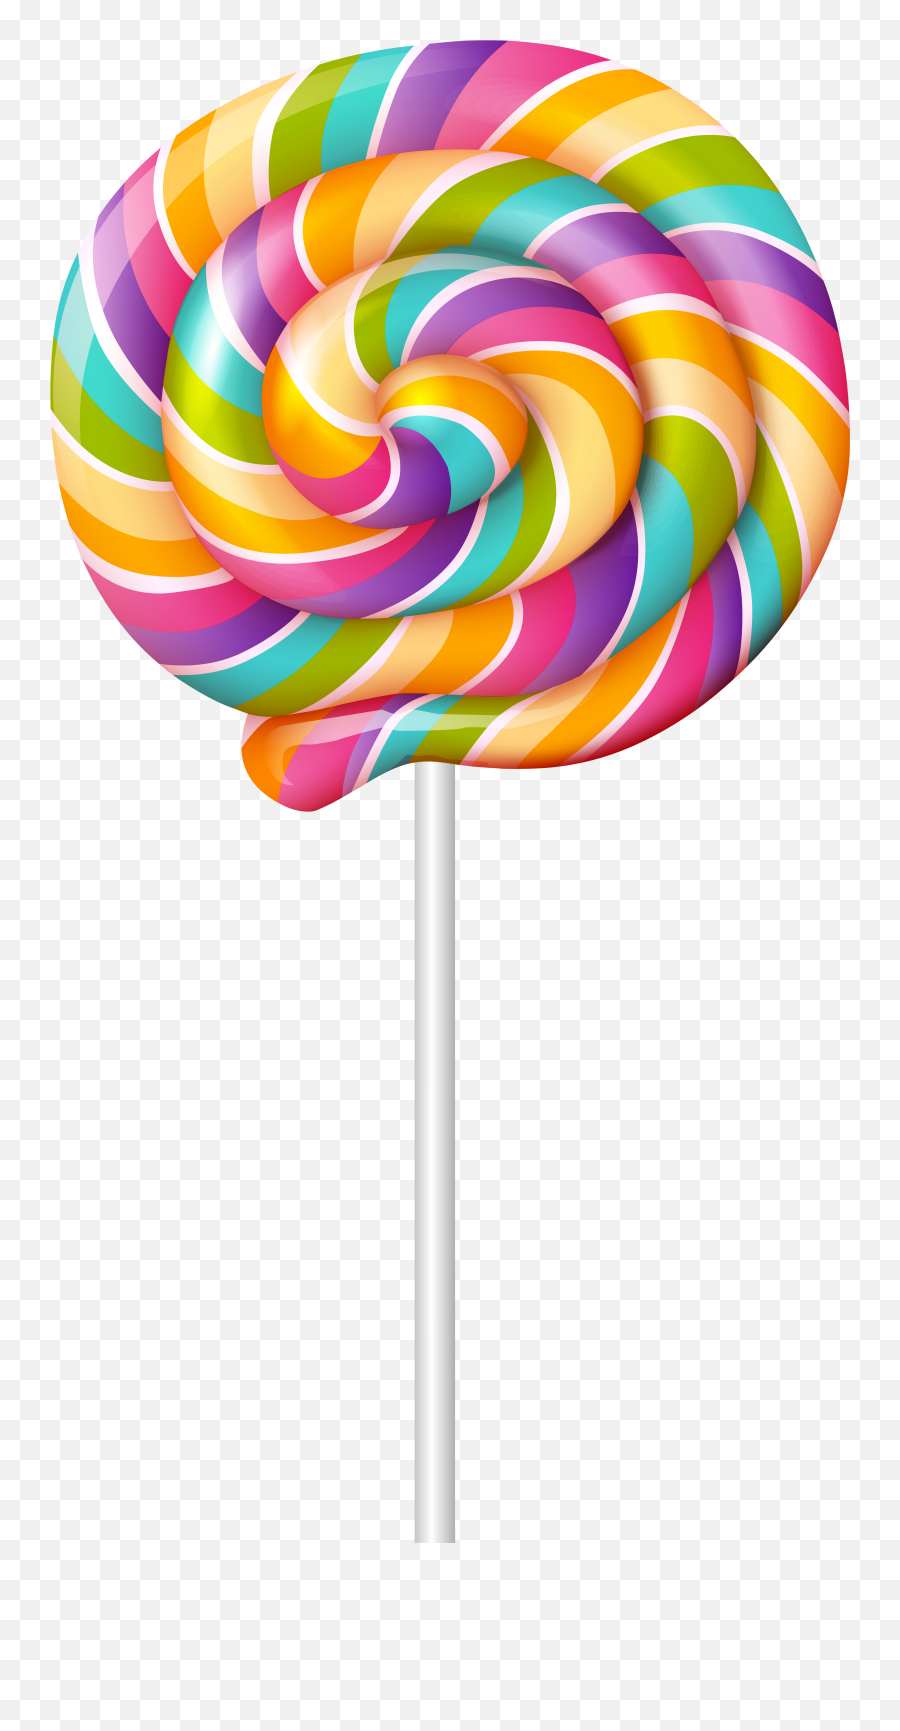 Swirl Lollipop Png Clipart In 2020 - Lollipop Clipart,Swirl Clipart Transparent Background